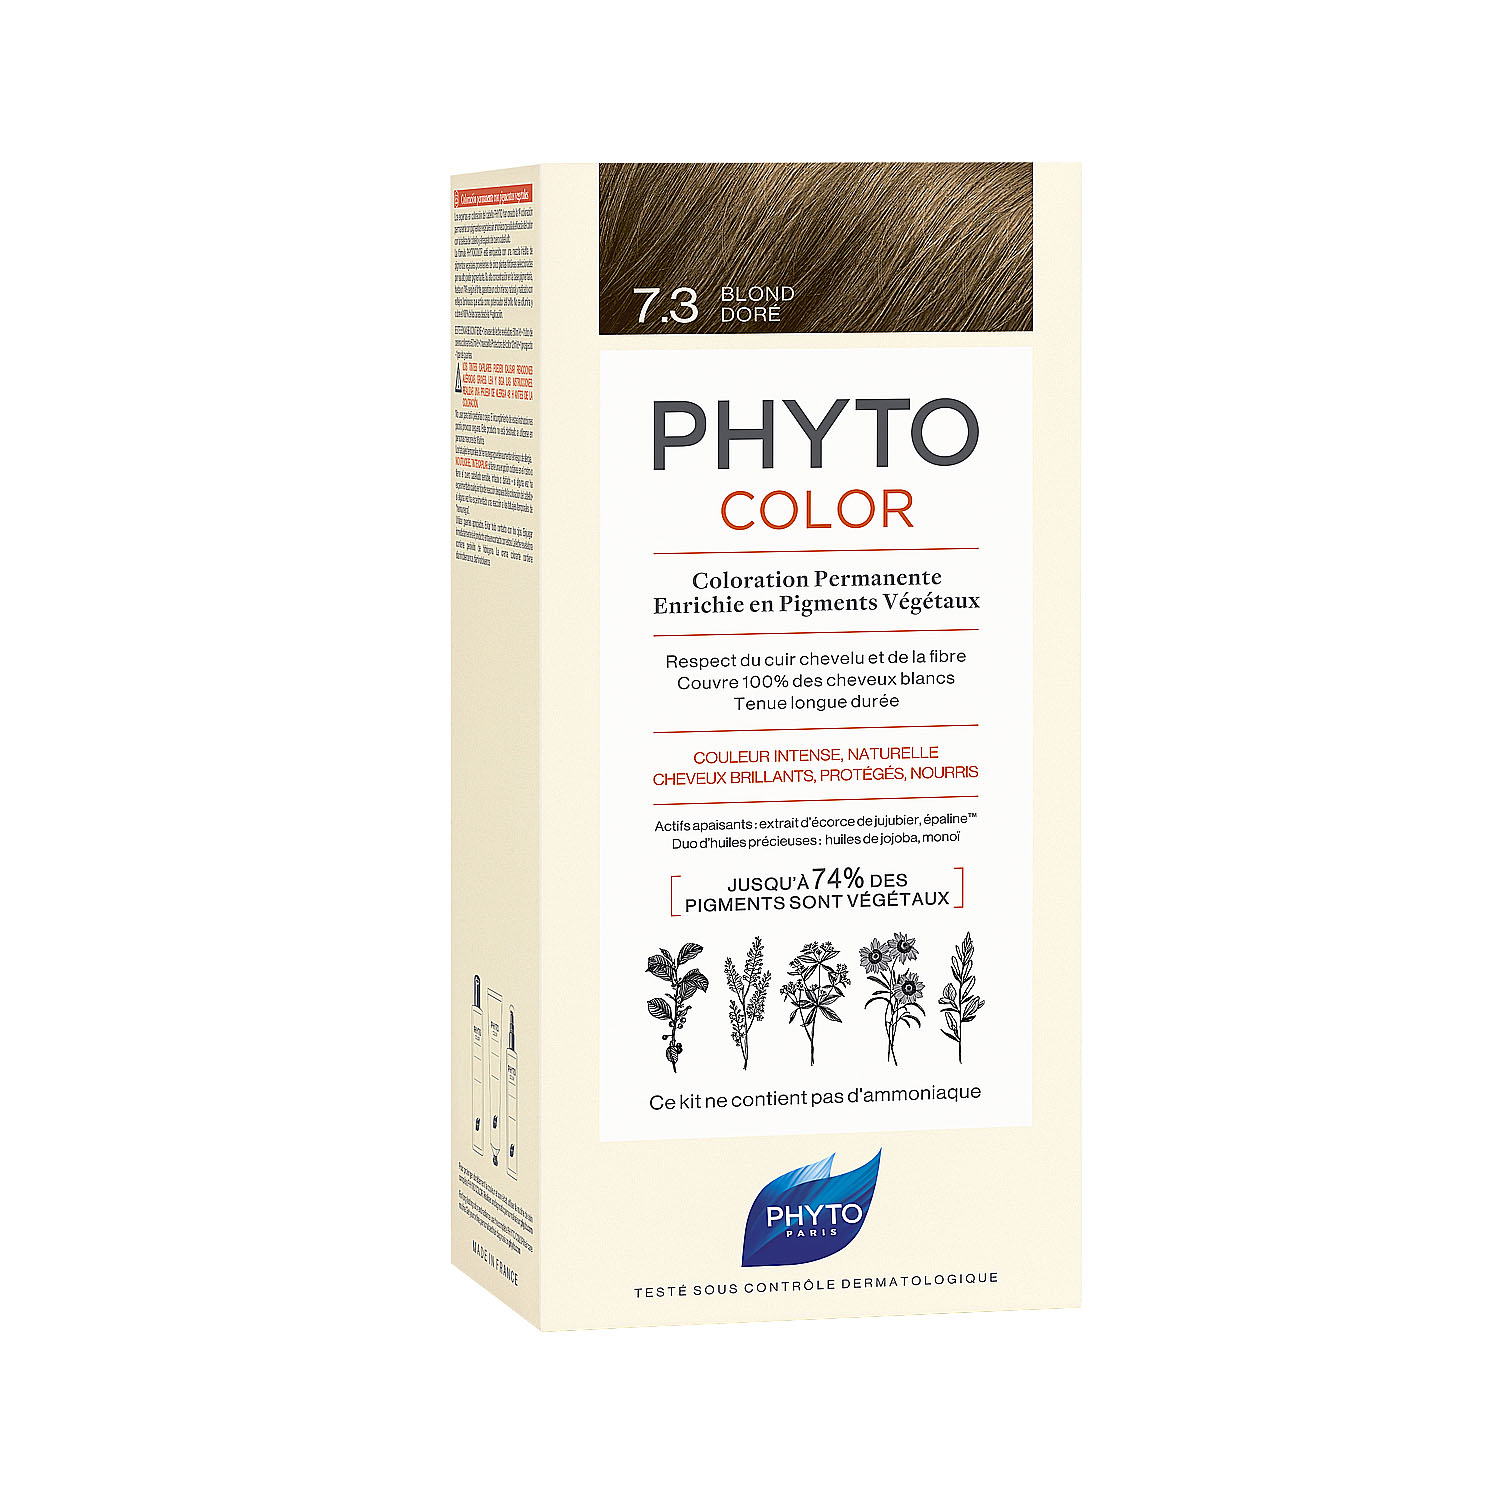 Купить Phytosolba Phyto Hair Color краска для волос 7.3 золотистый блонд 50/50/12мл, Lab.Phytosolba